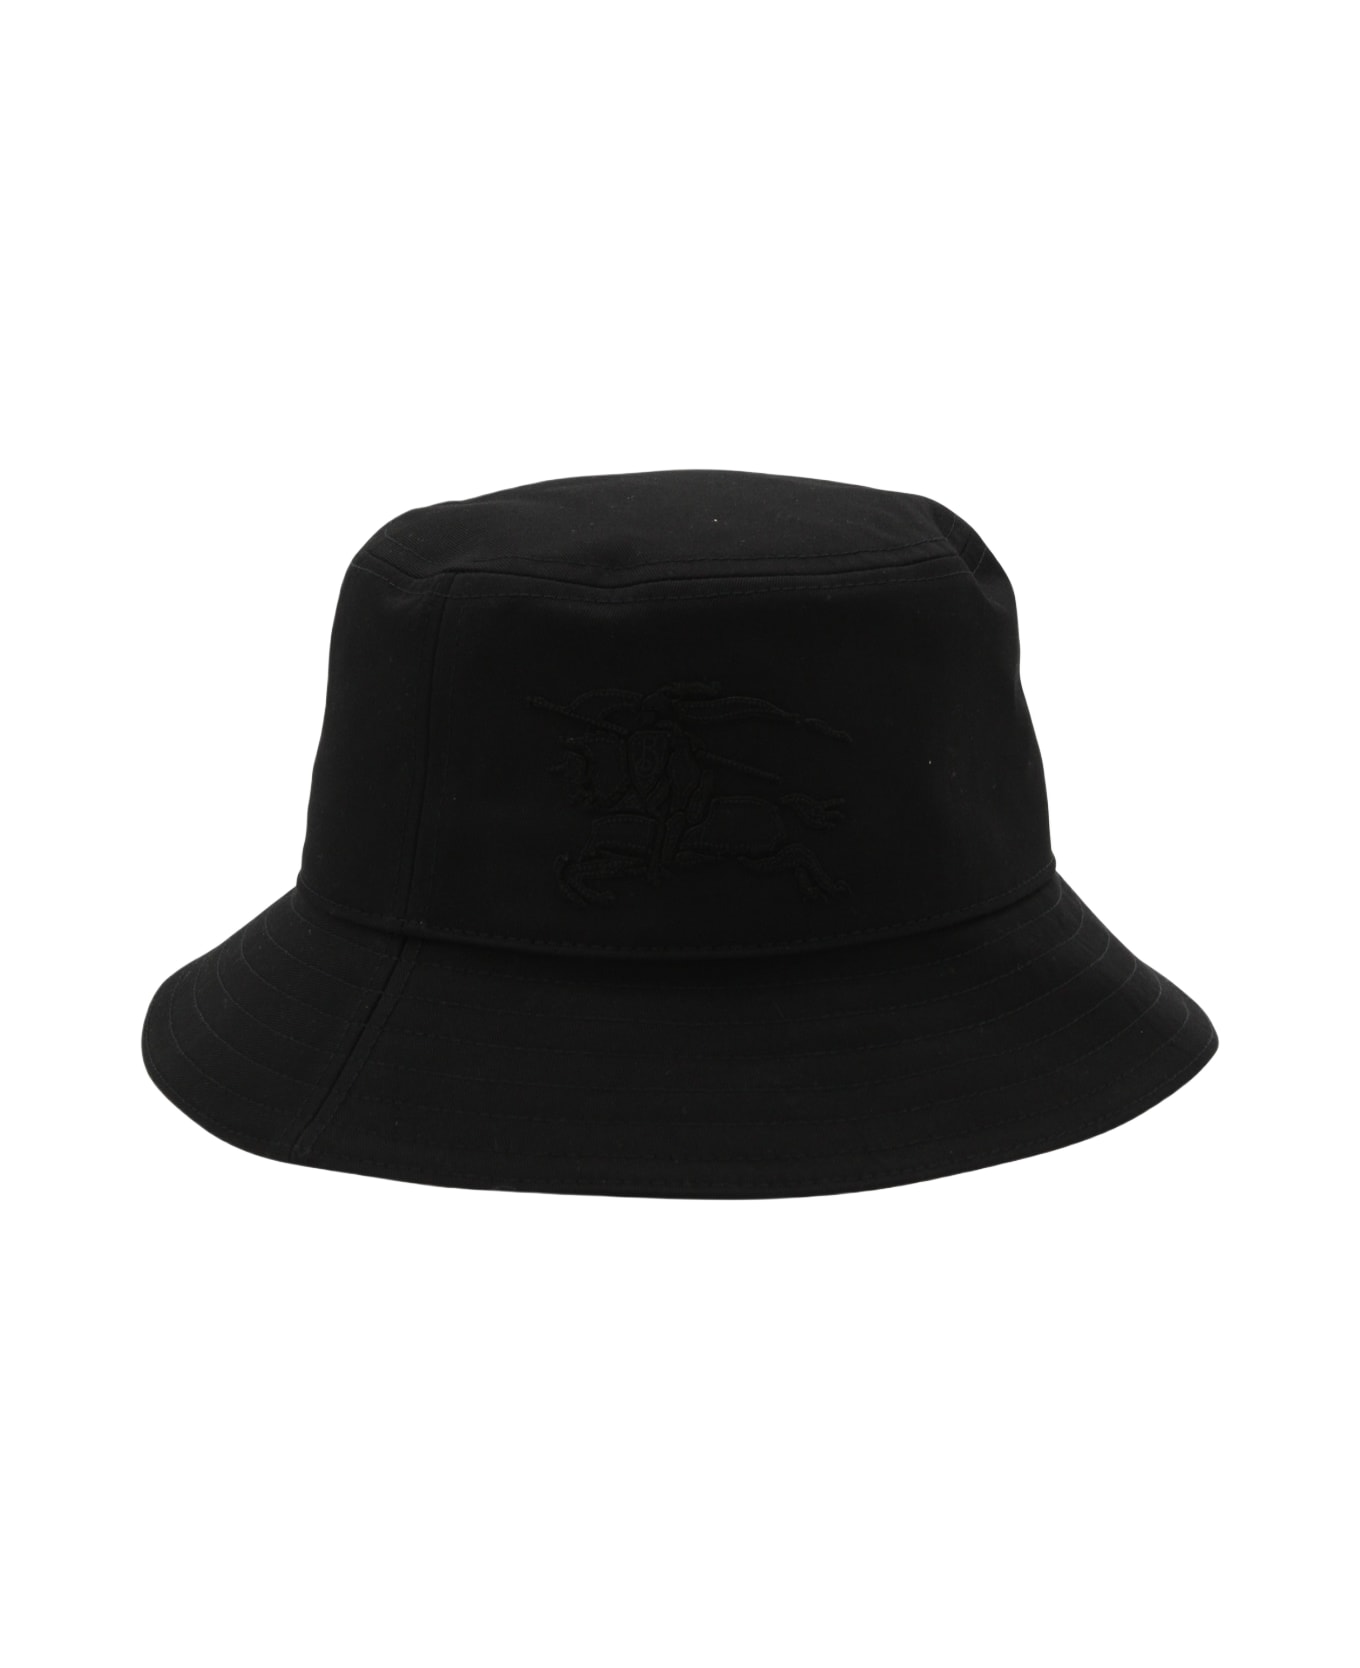 Burberry Black Cotton Blend Bucket Hat - Black